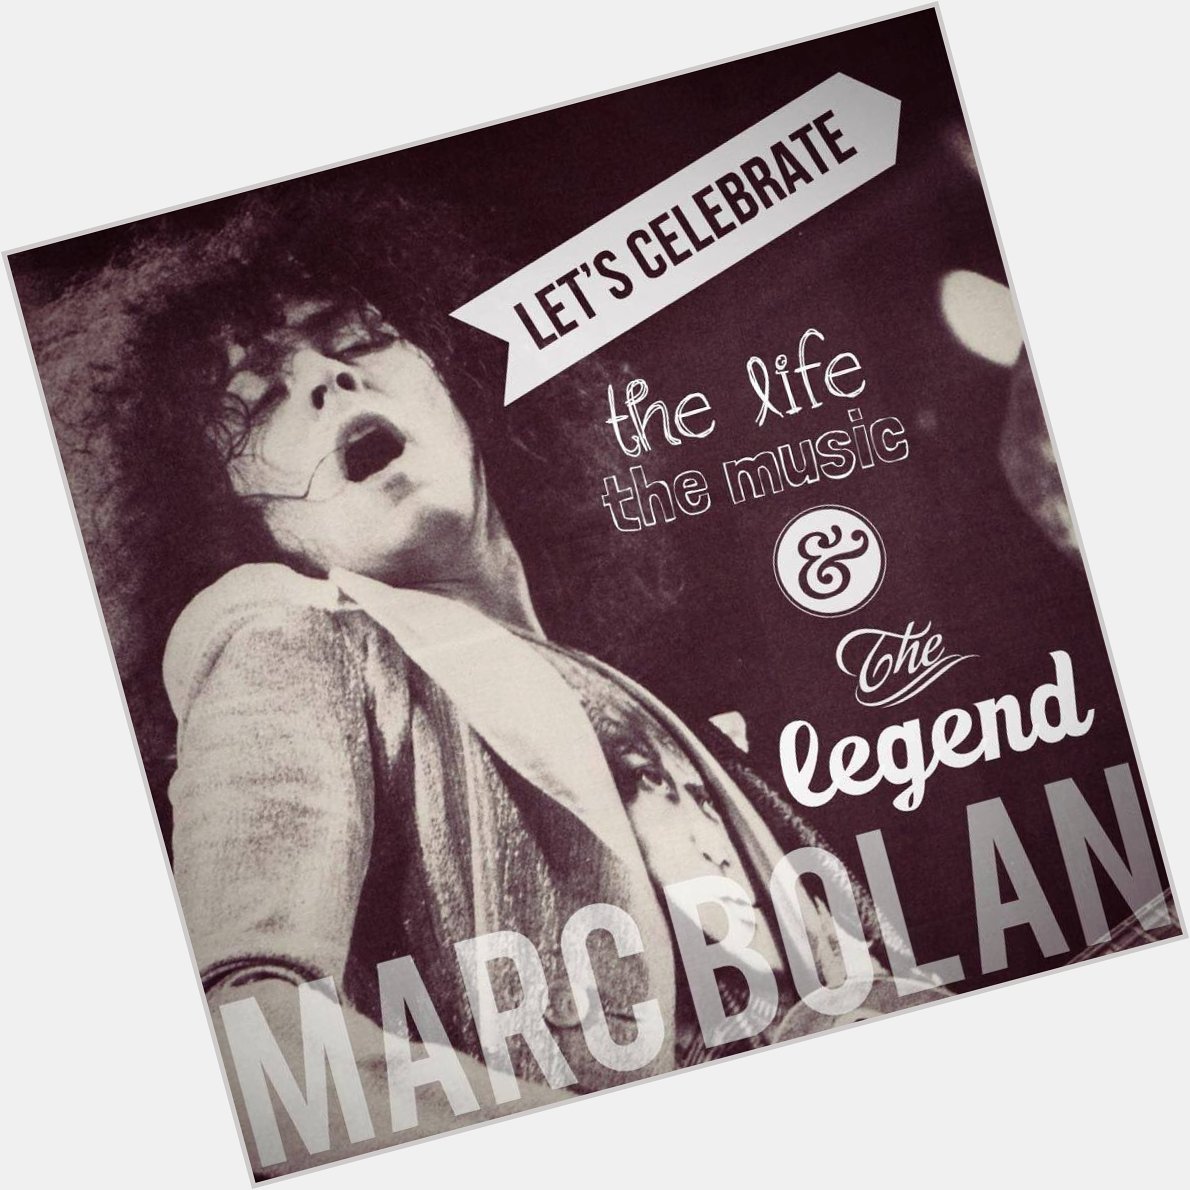 Happy birthday Marc Bolan    